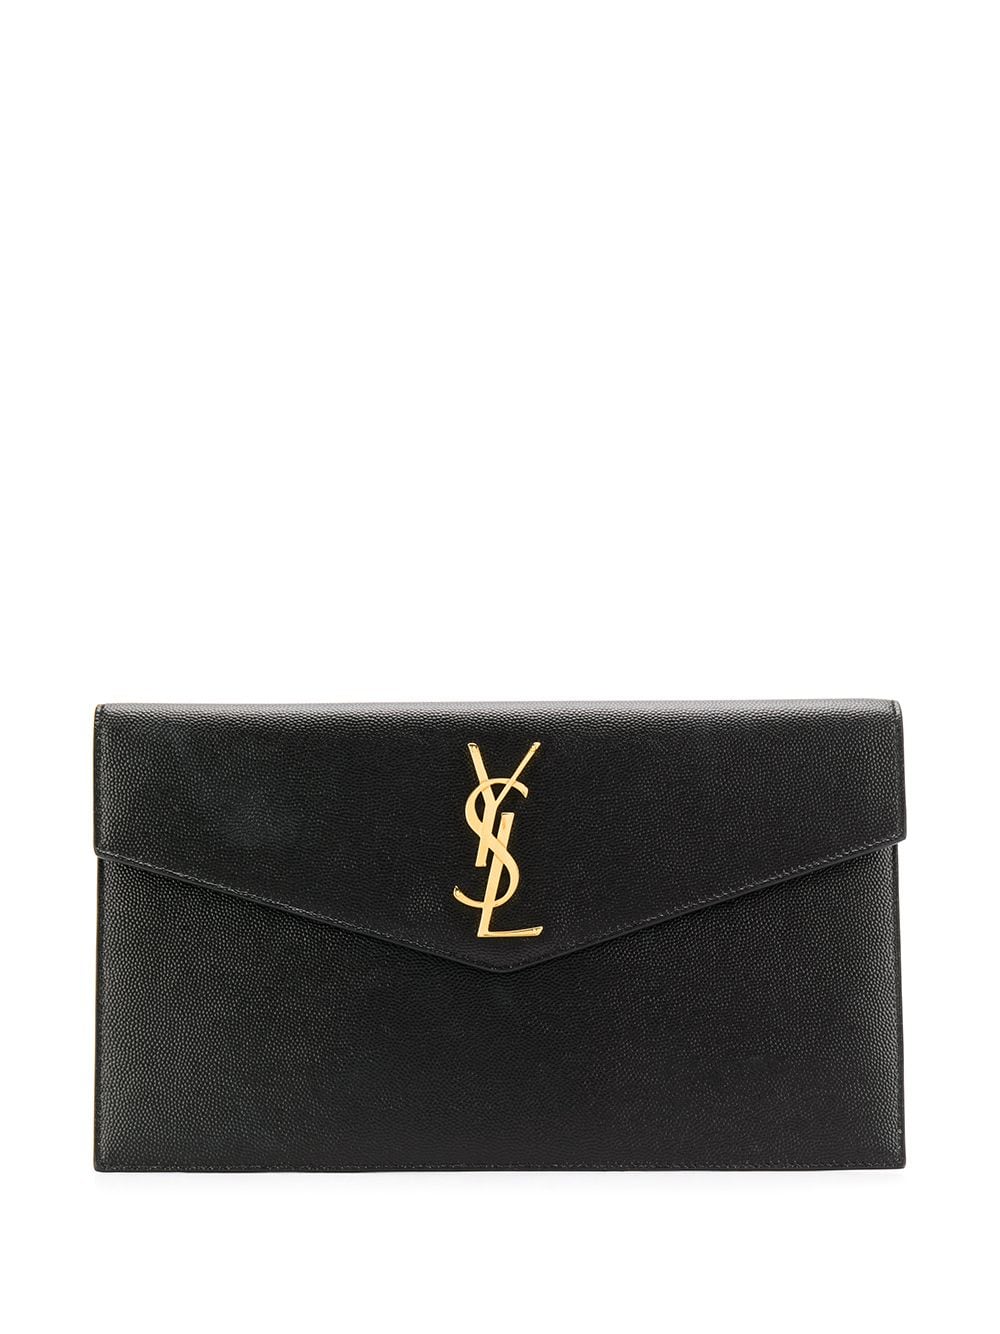 Beige YSL-monogram quilted-leather clutch bag, Saint Laurent